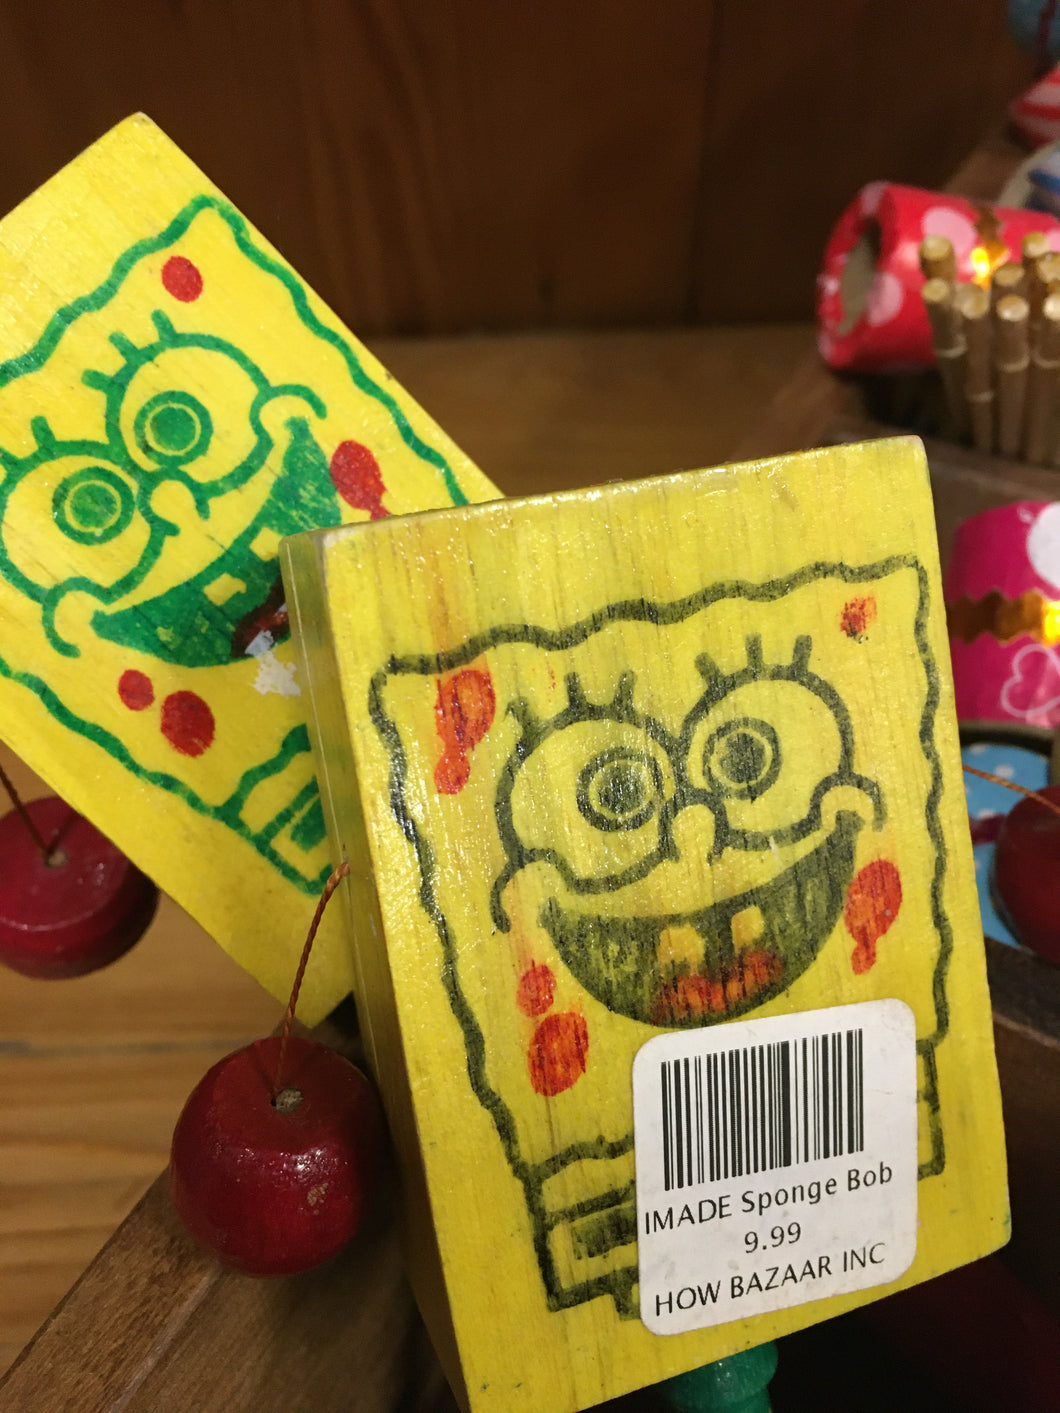 IMADE Sponge Bob